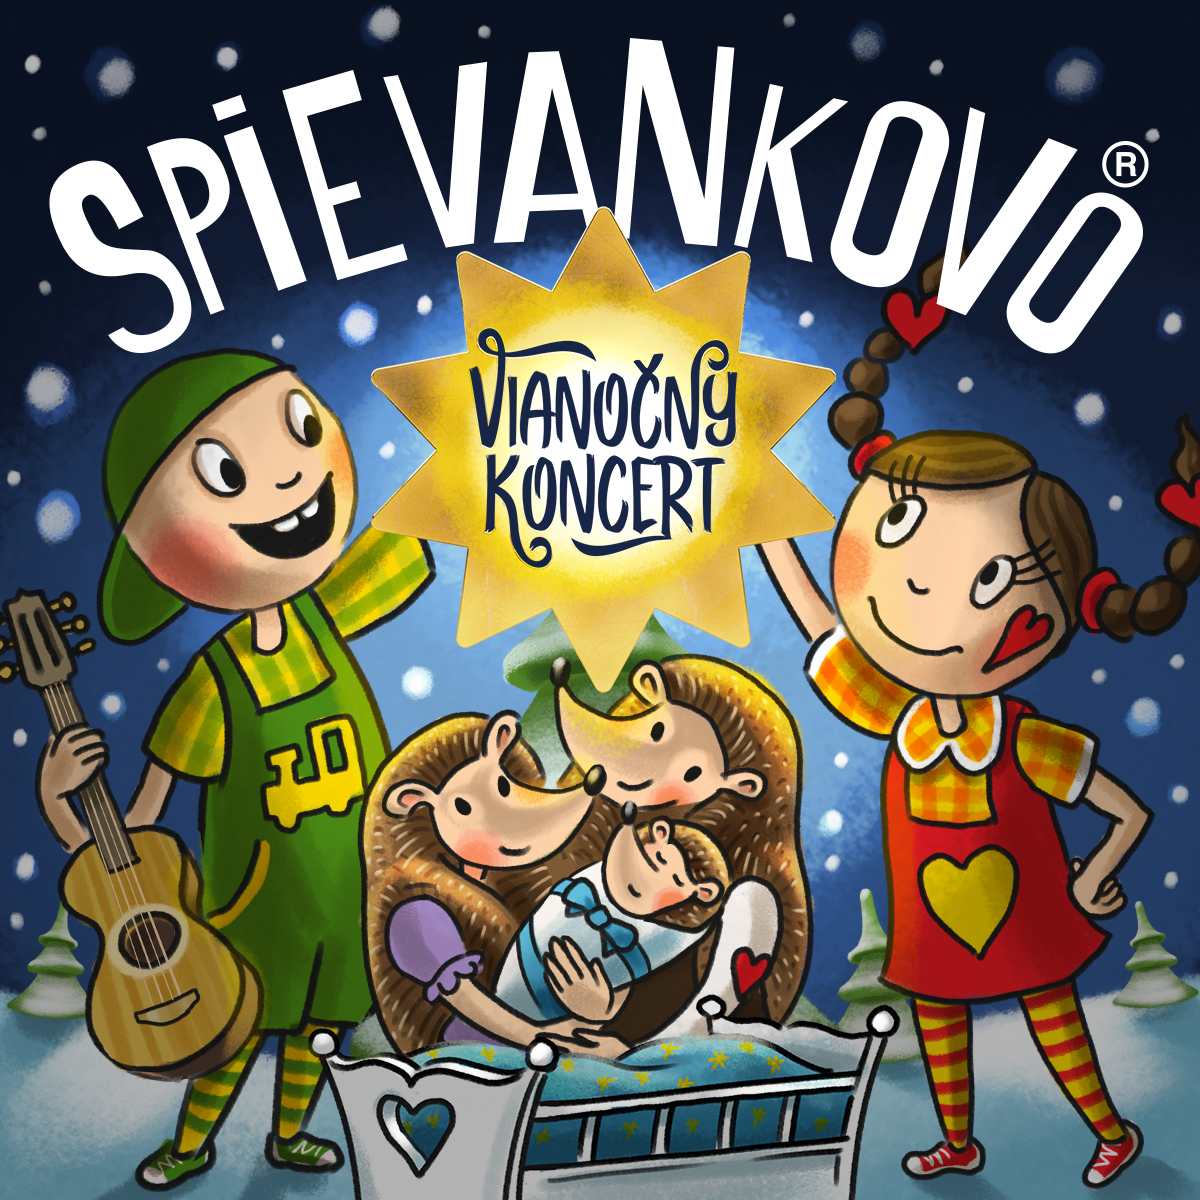 picture SPIEVANKOVO - vianočny koncert